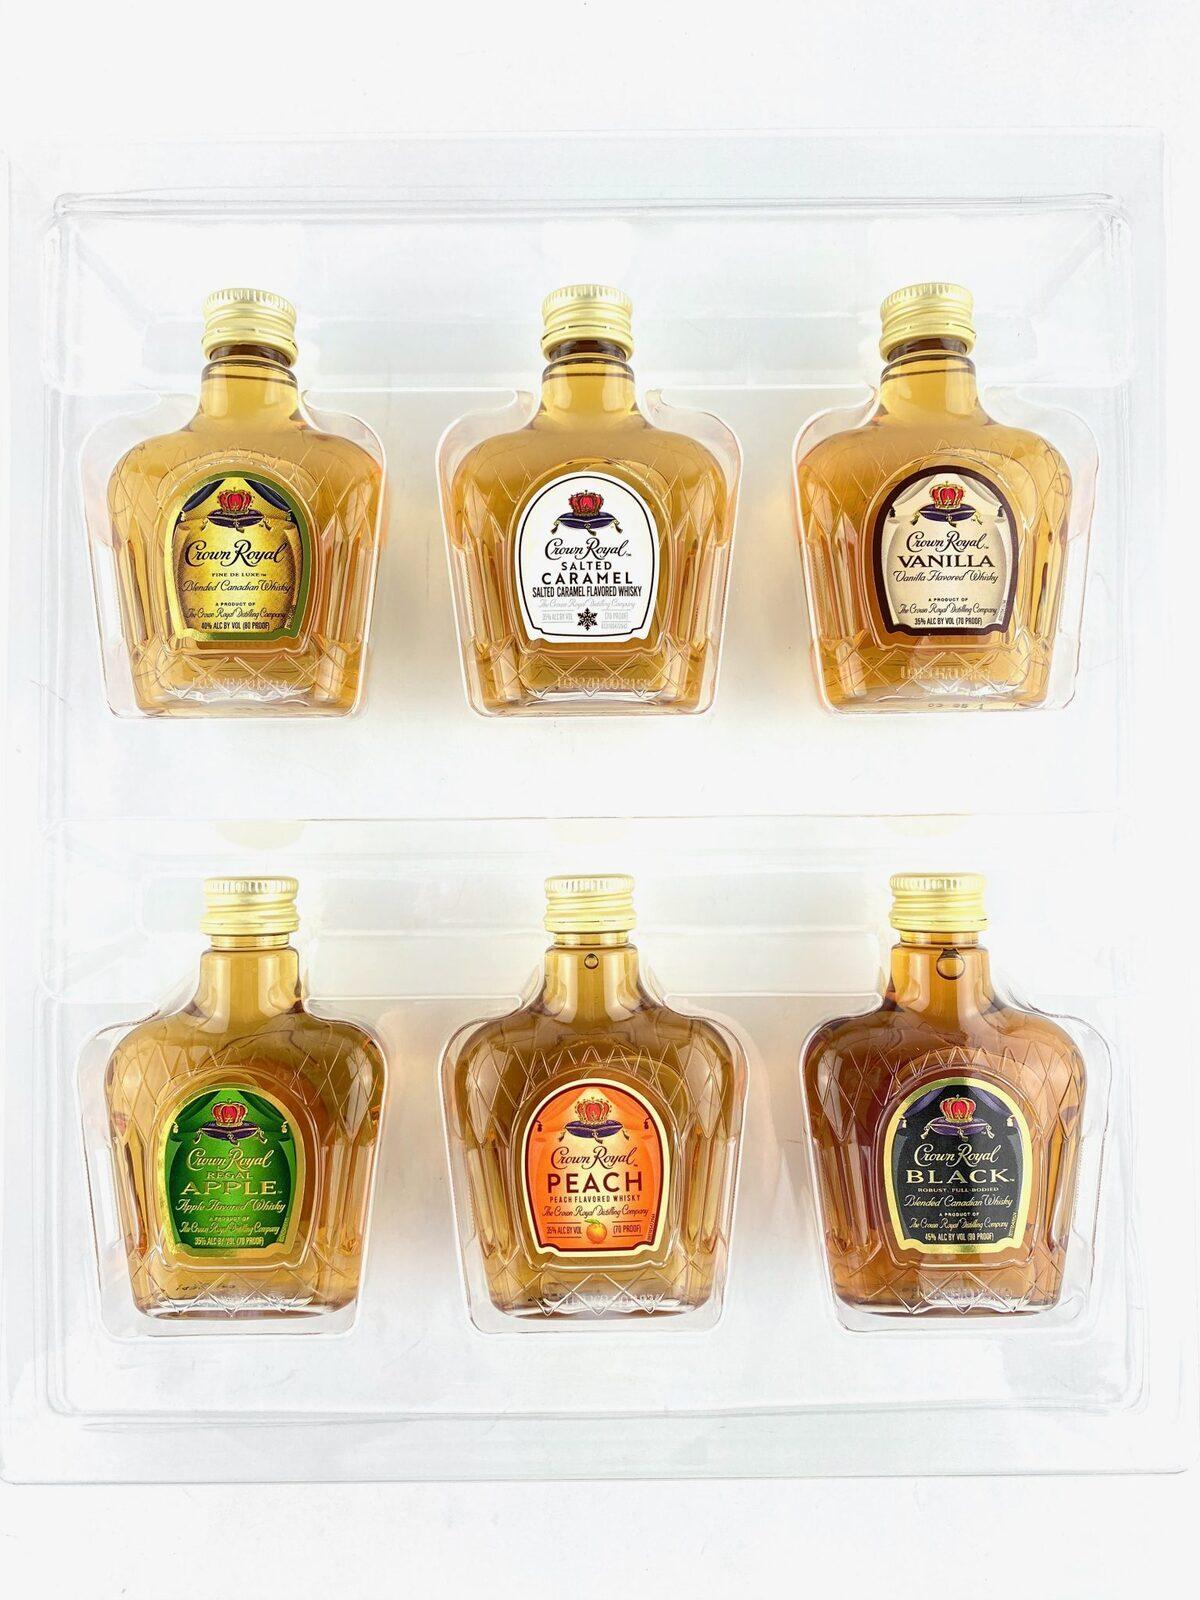 A Closer Look at Crown Royal Mini Bottles